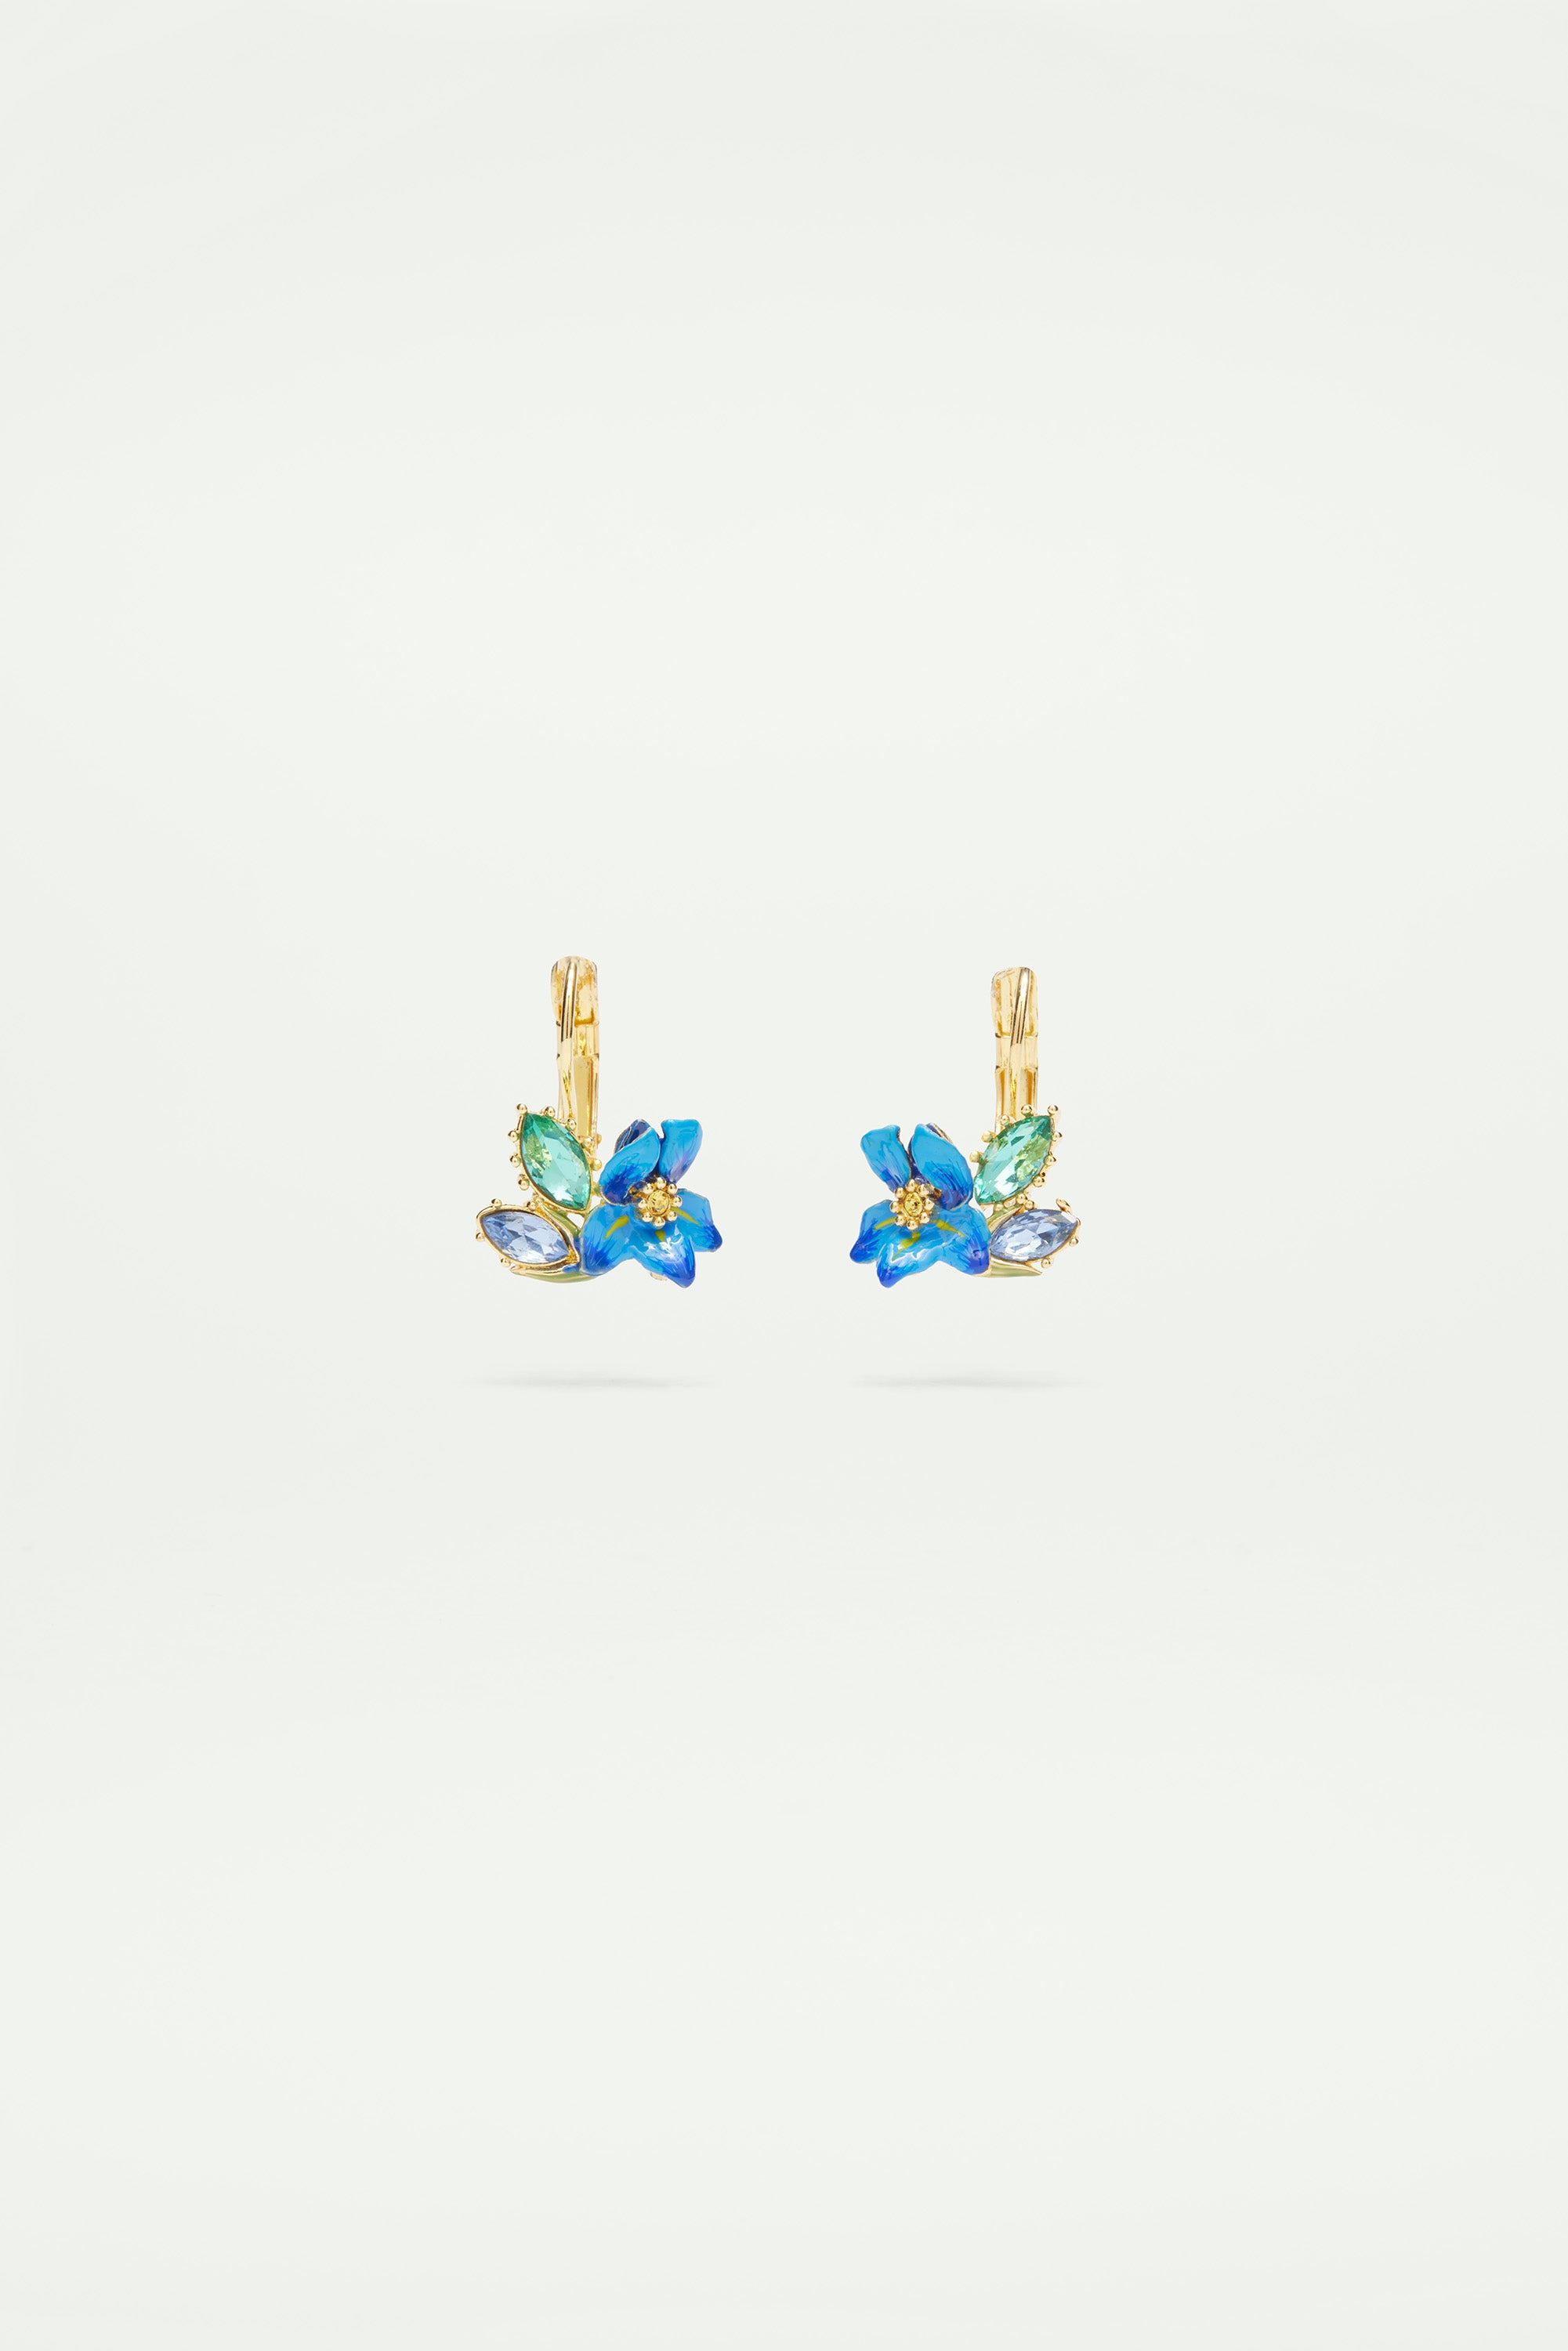 Siberian Iris and Faceted glass sleeper earrings